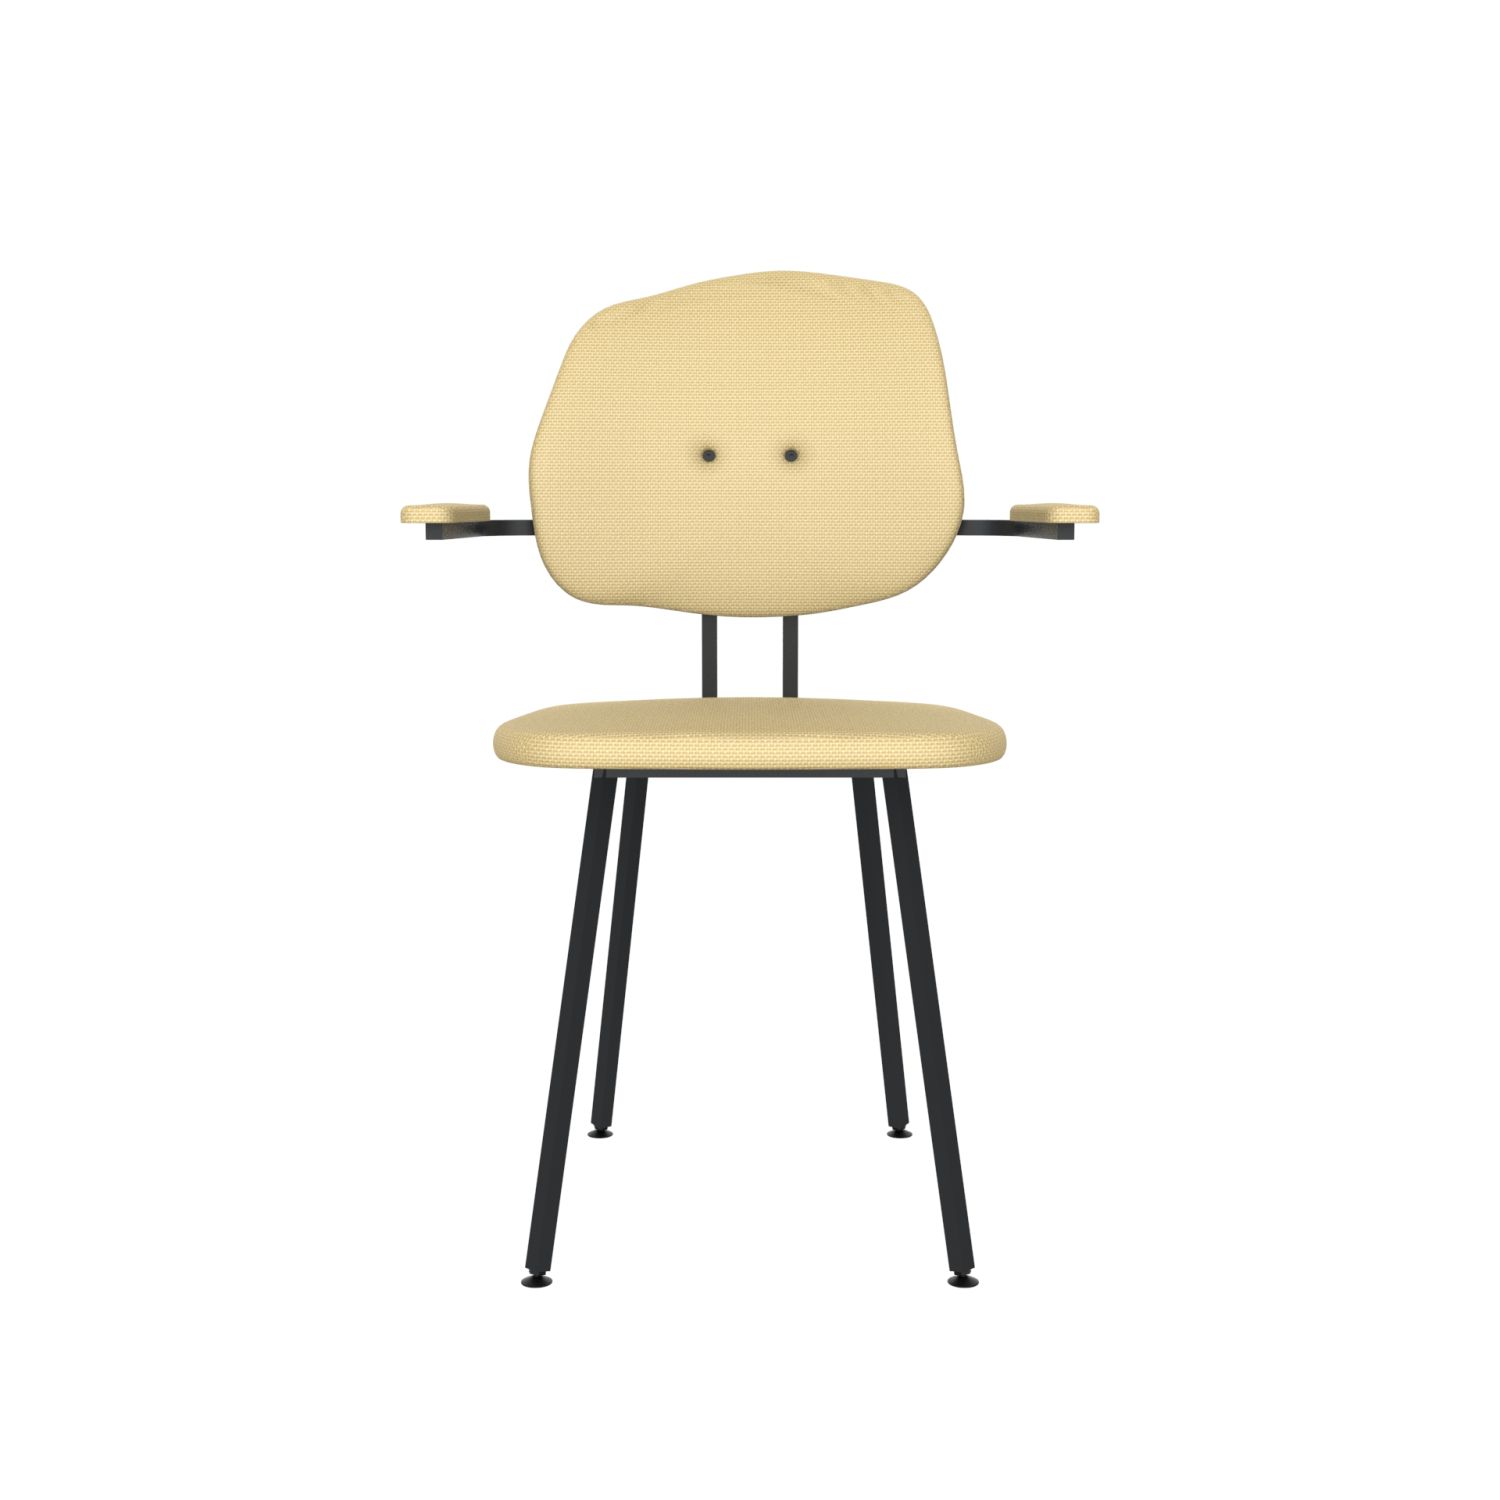 lensvelt maarten baas chair 102 not stackable with armrests backrest g light brown 141 black ral9005 hard leg ends